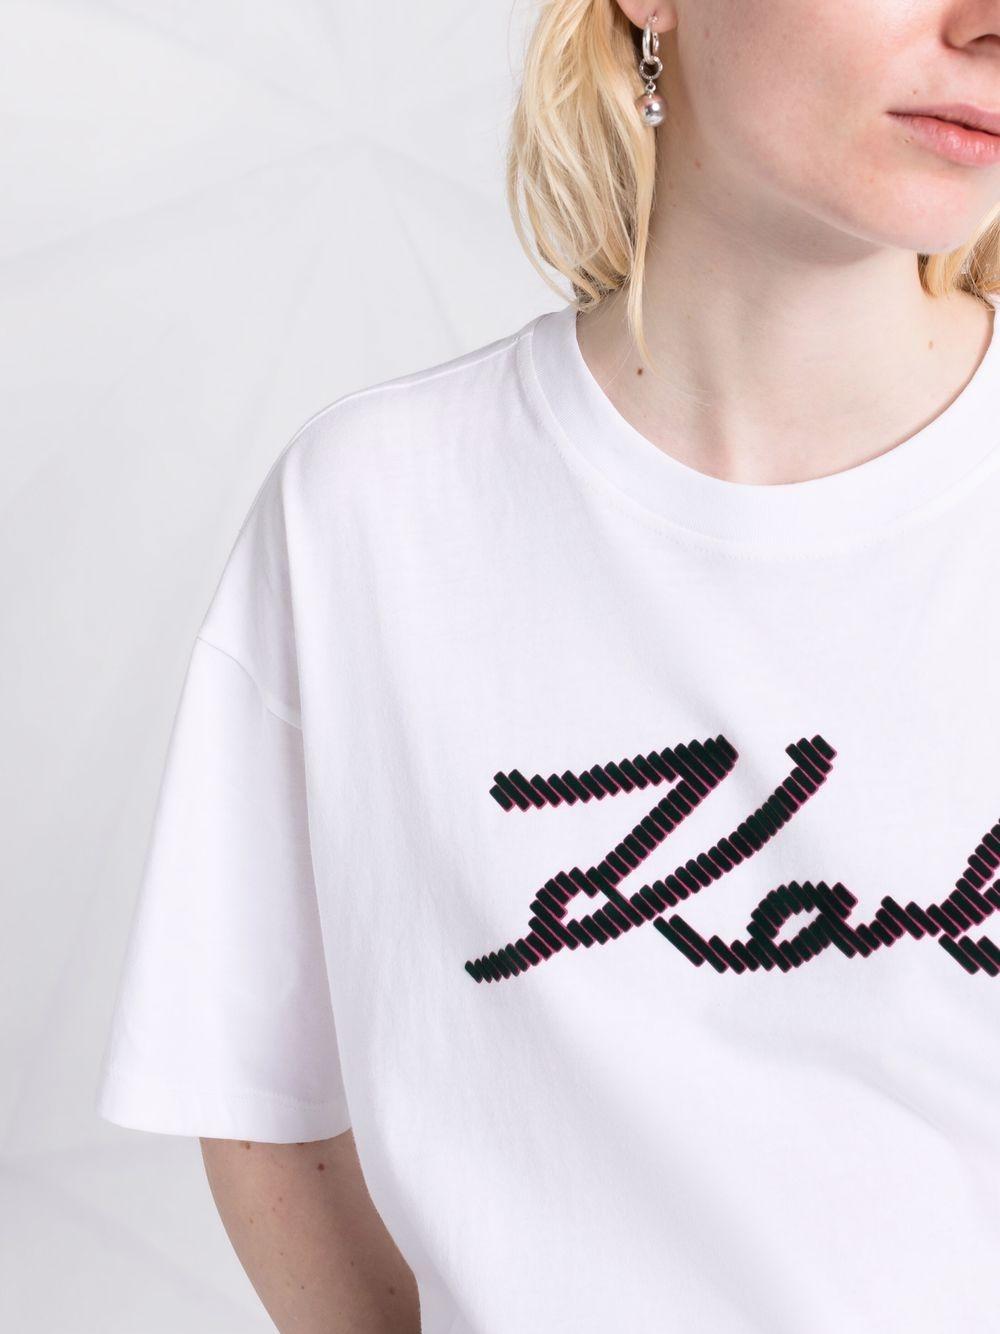 Camiseta Karl Lagerfeld blanca logo t-shirt